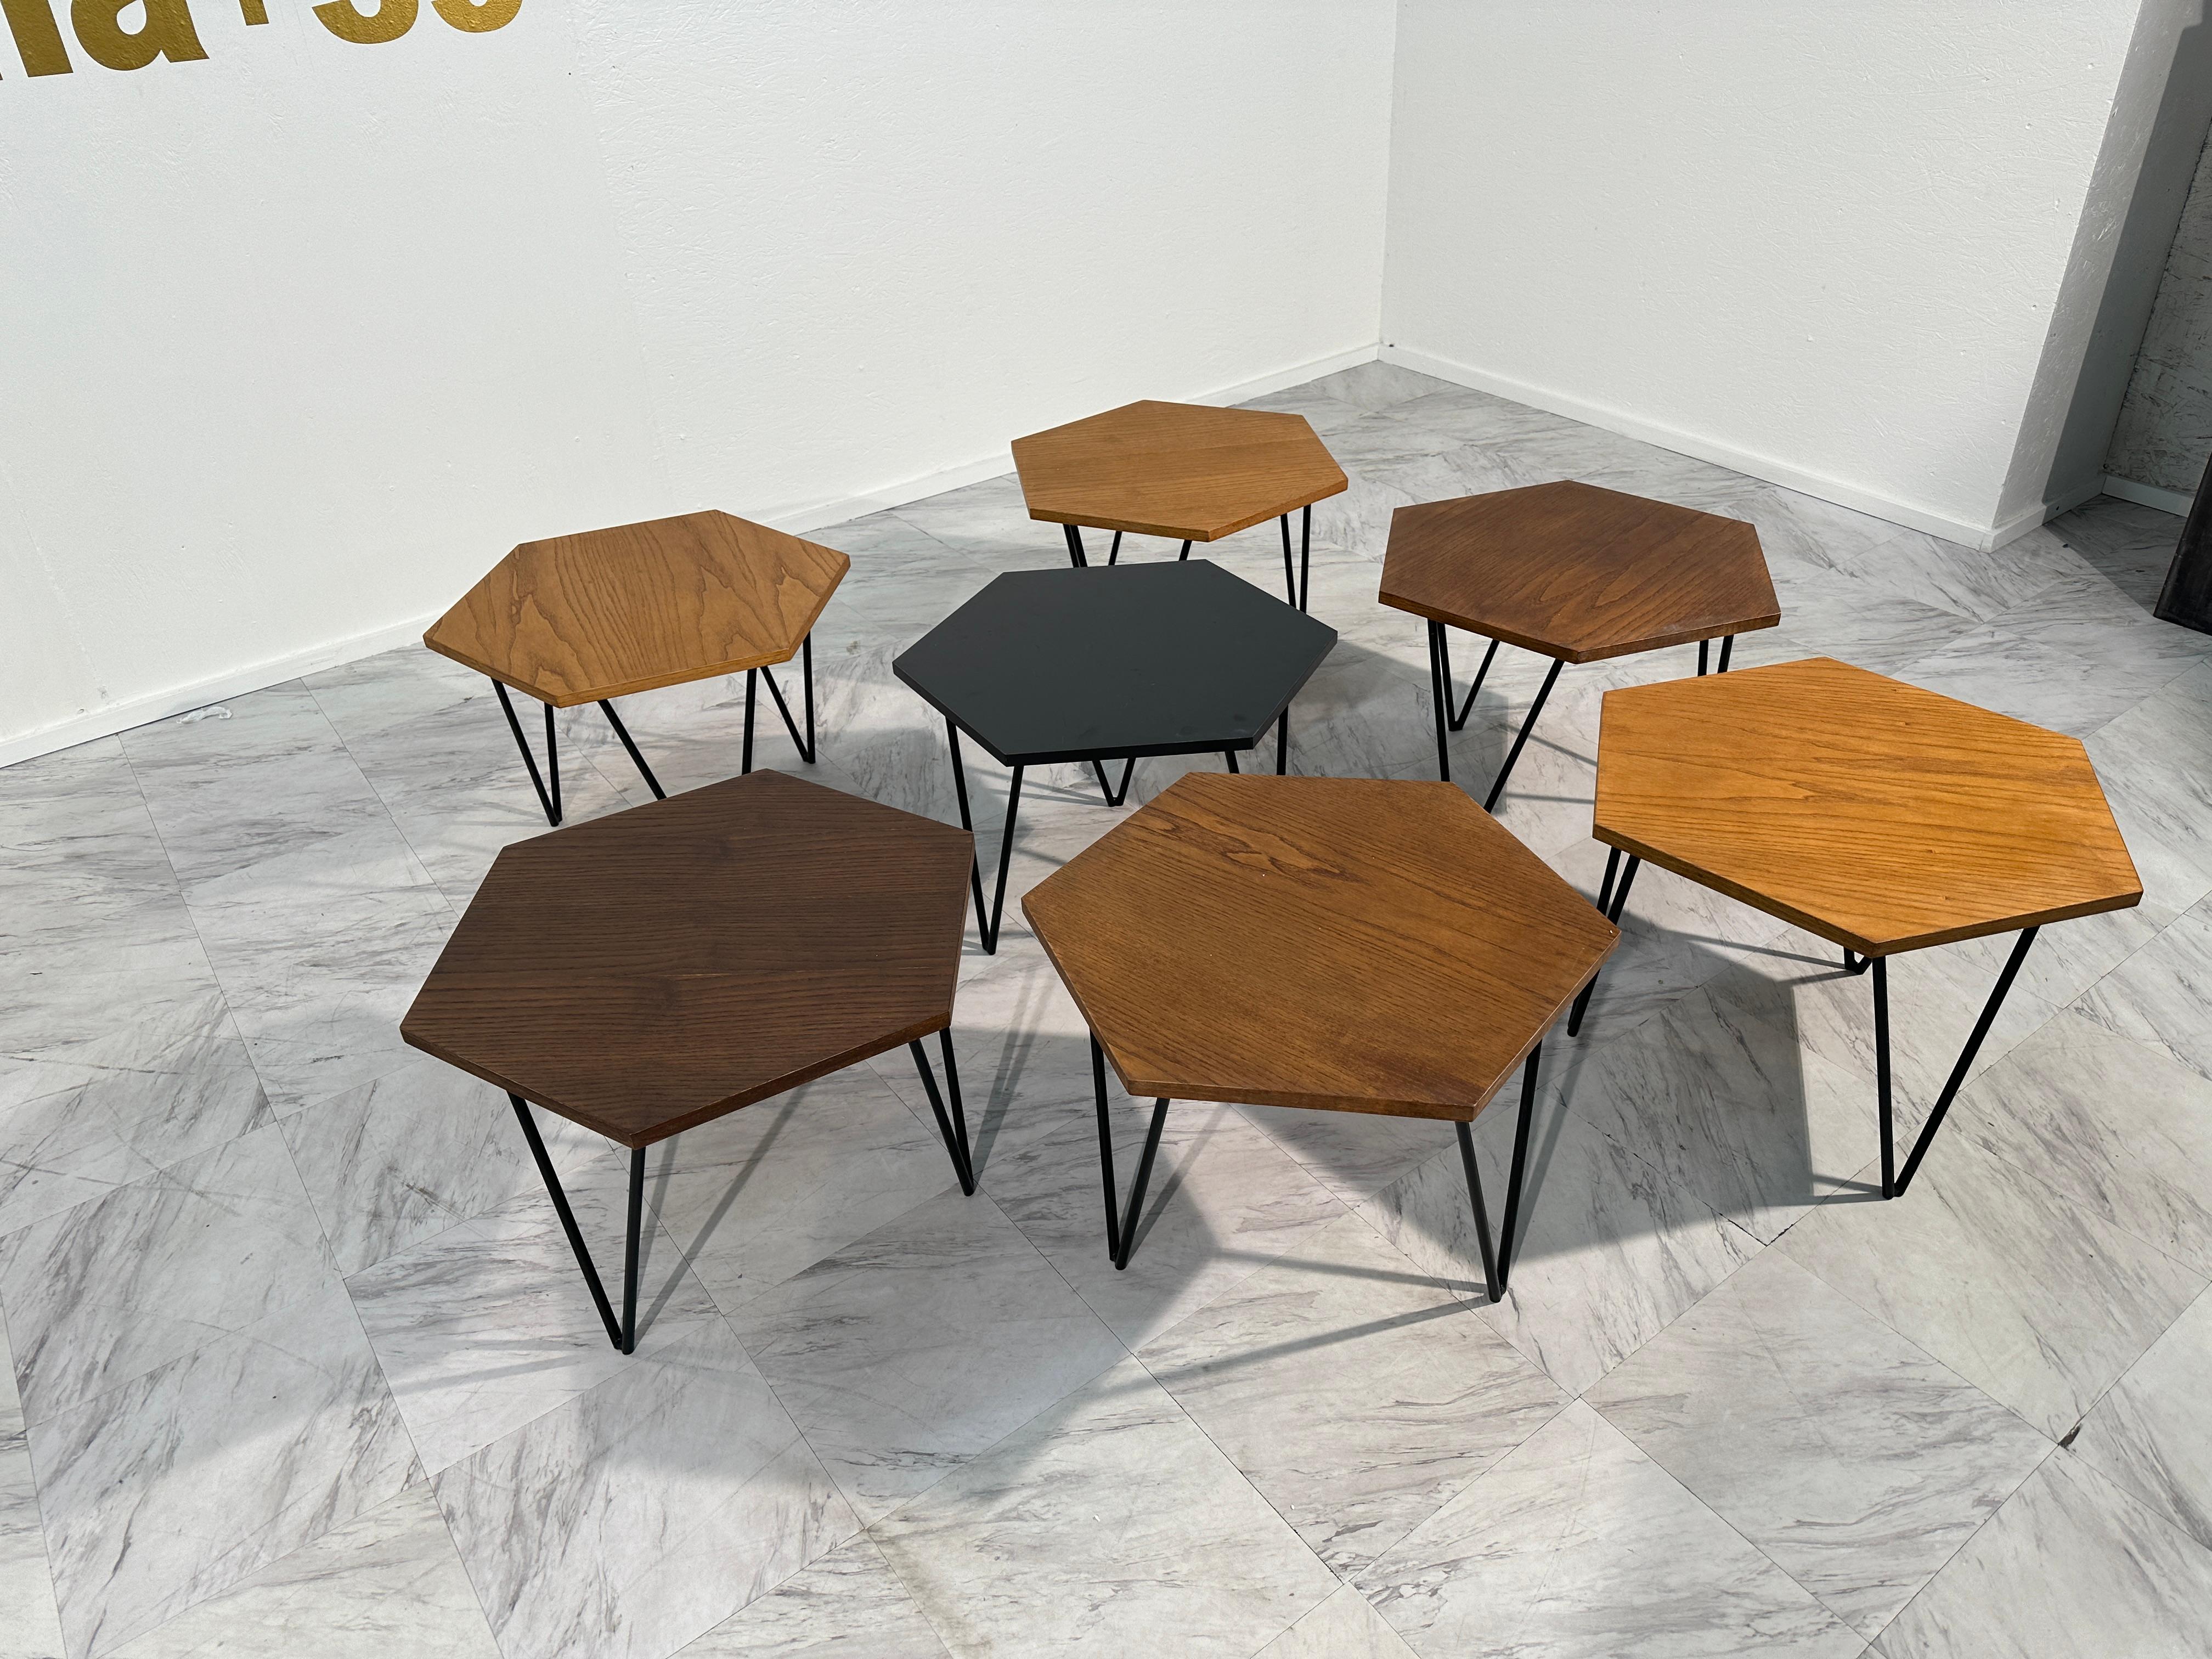 Ensemble de 7 tables basses modulaires hexagonales Gio Ponti, ISA Bergamo, Italie, années 1950 en vente 7